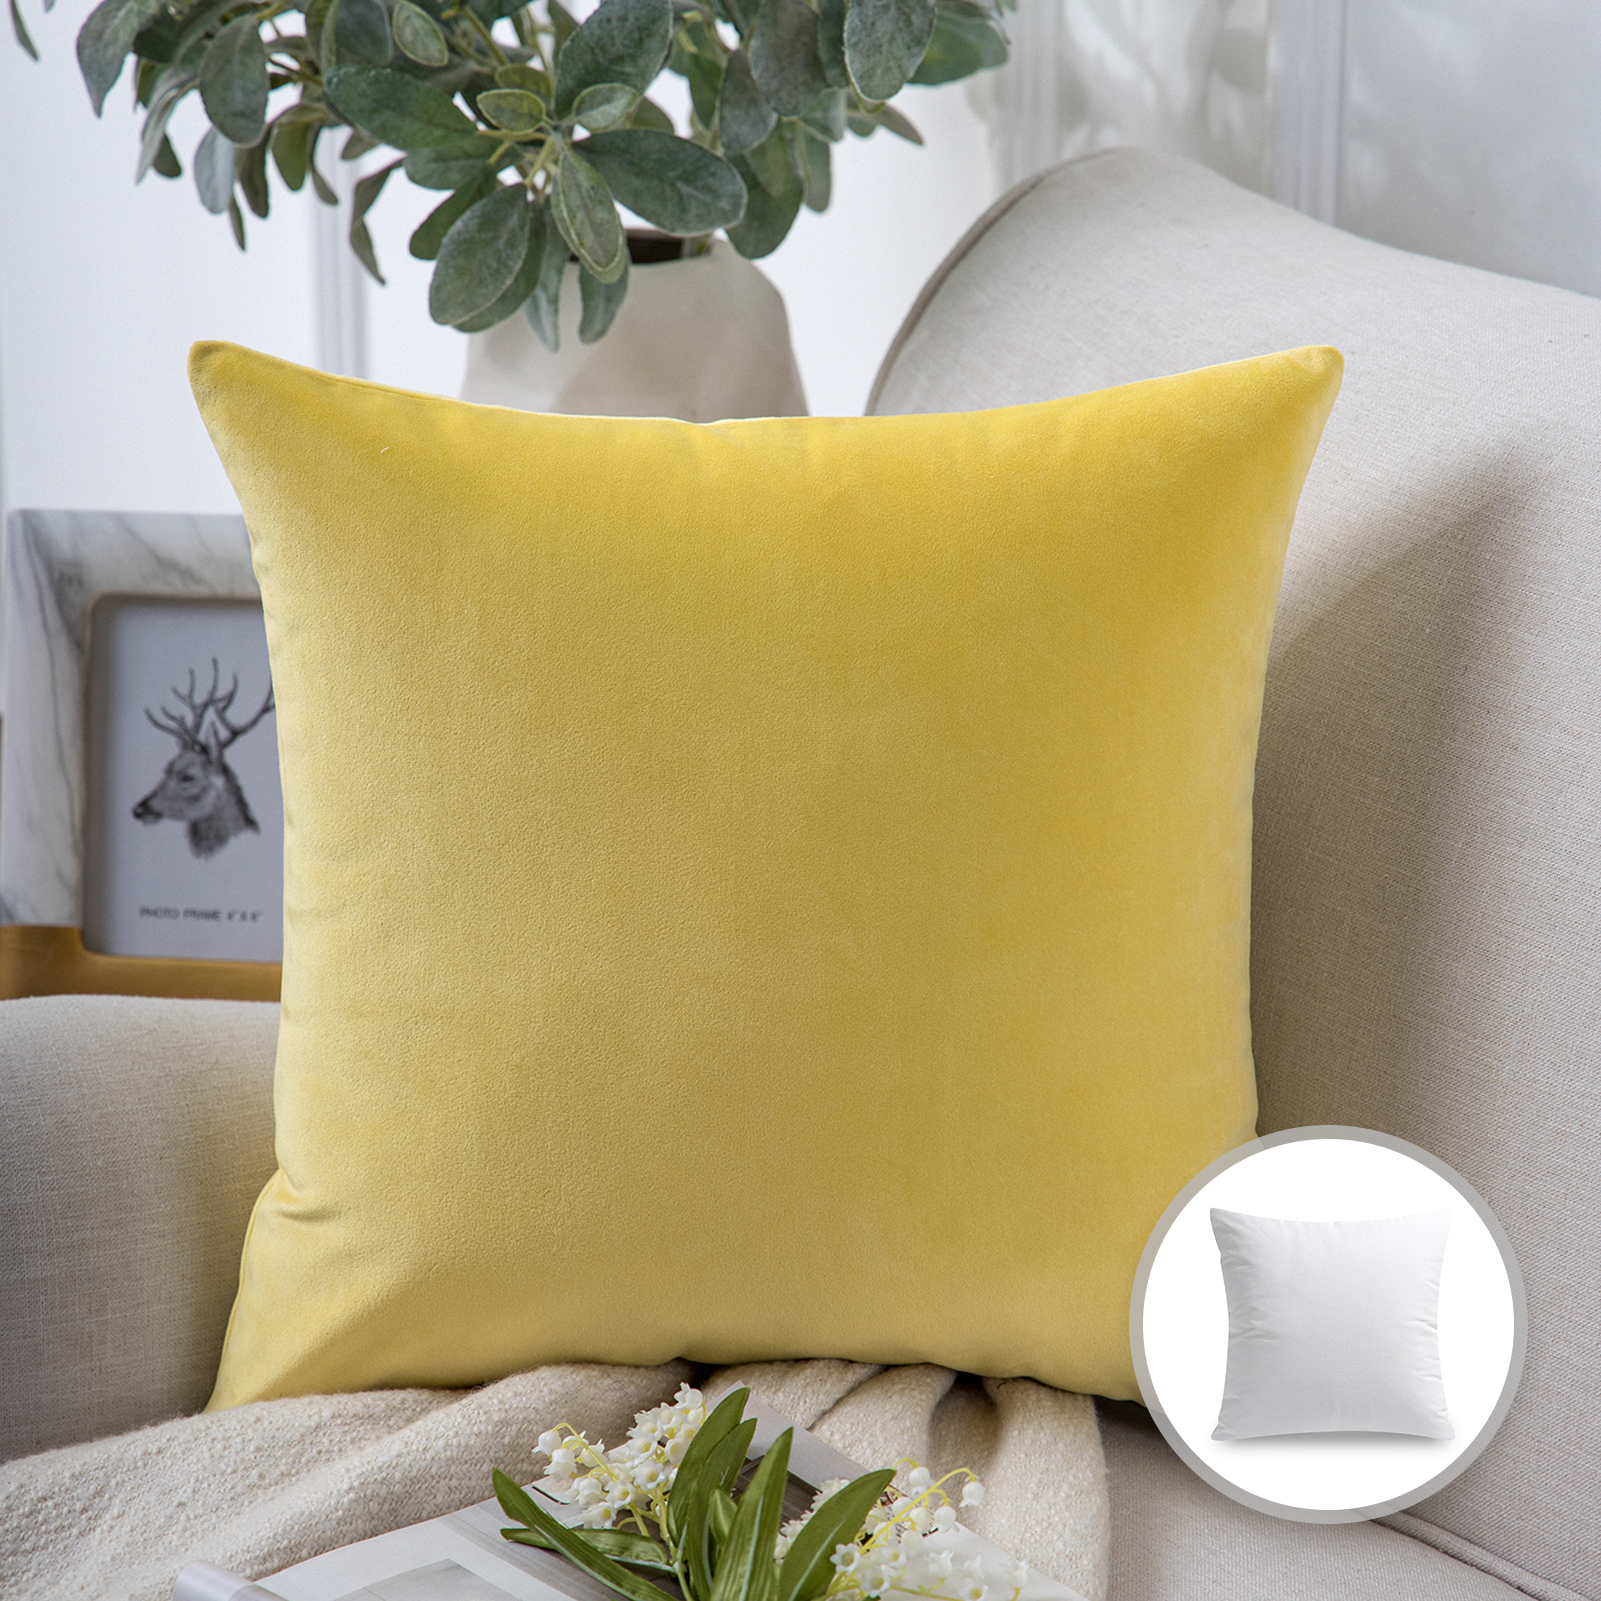 Phantoscope Soft Silky Velvet Series Decorative Throw Pillow, 18" x 18", Yellow, 1 Pack - image 1 of 7